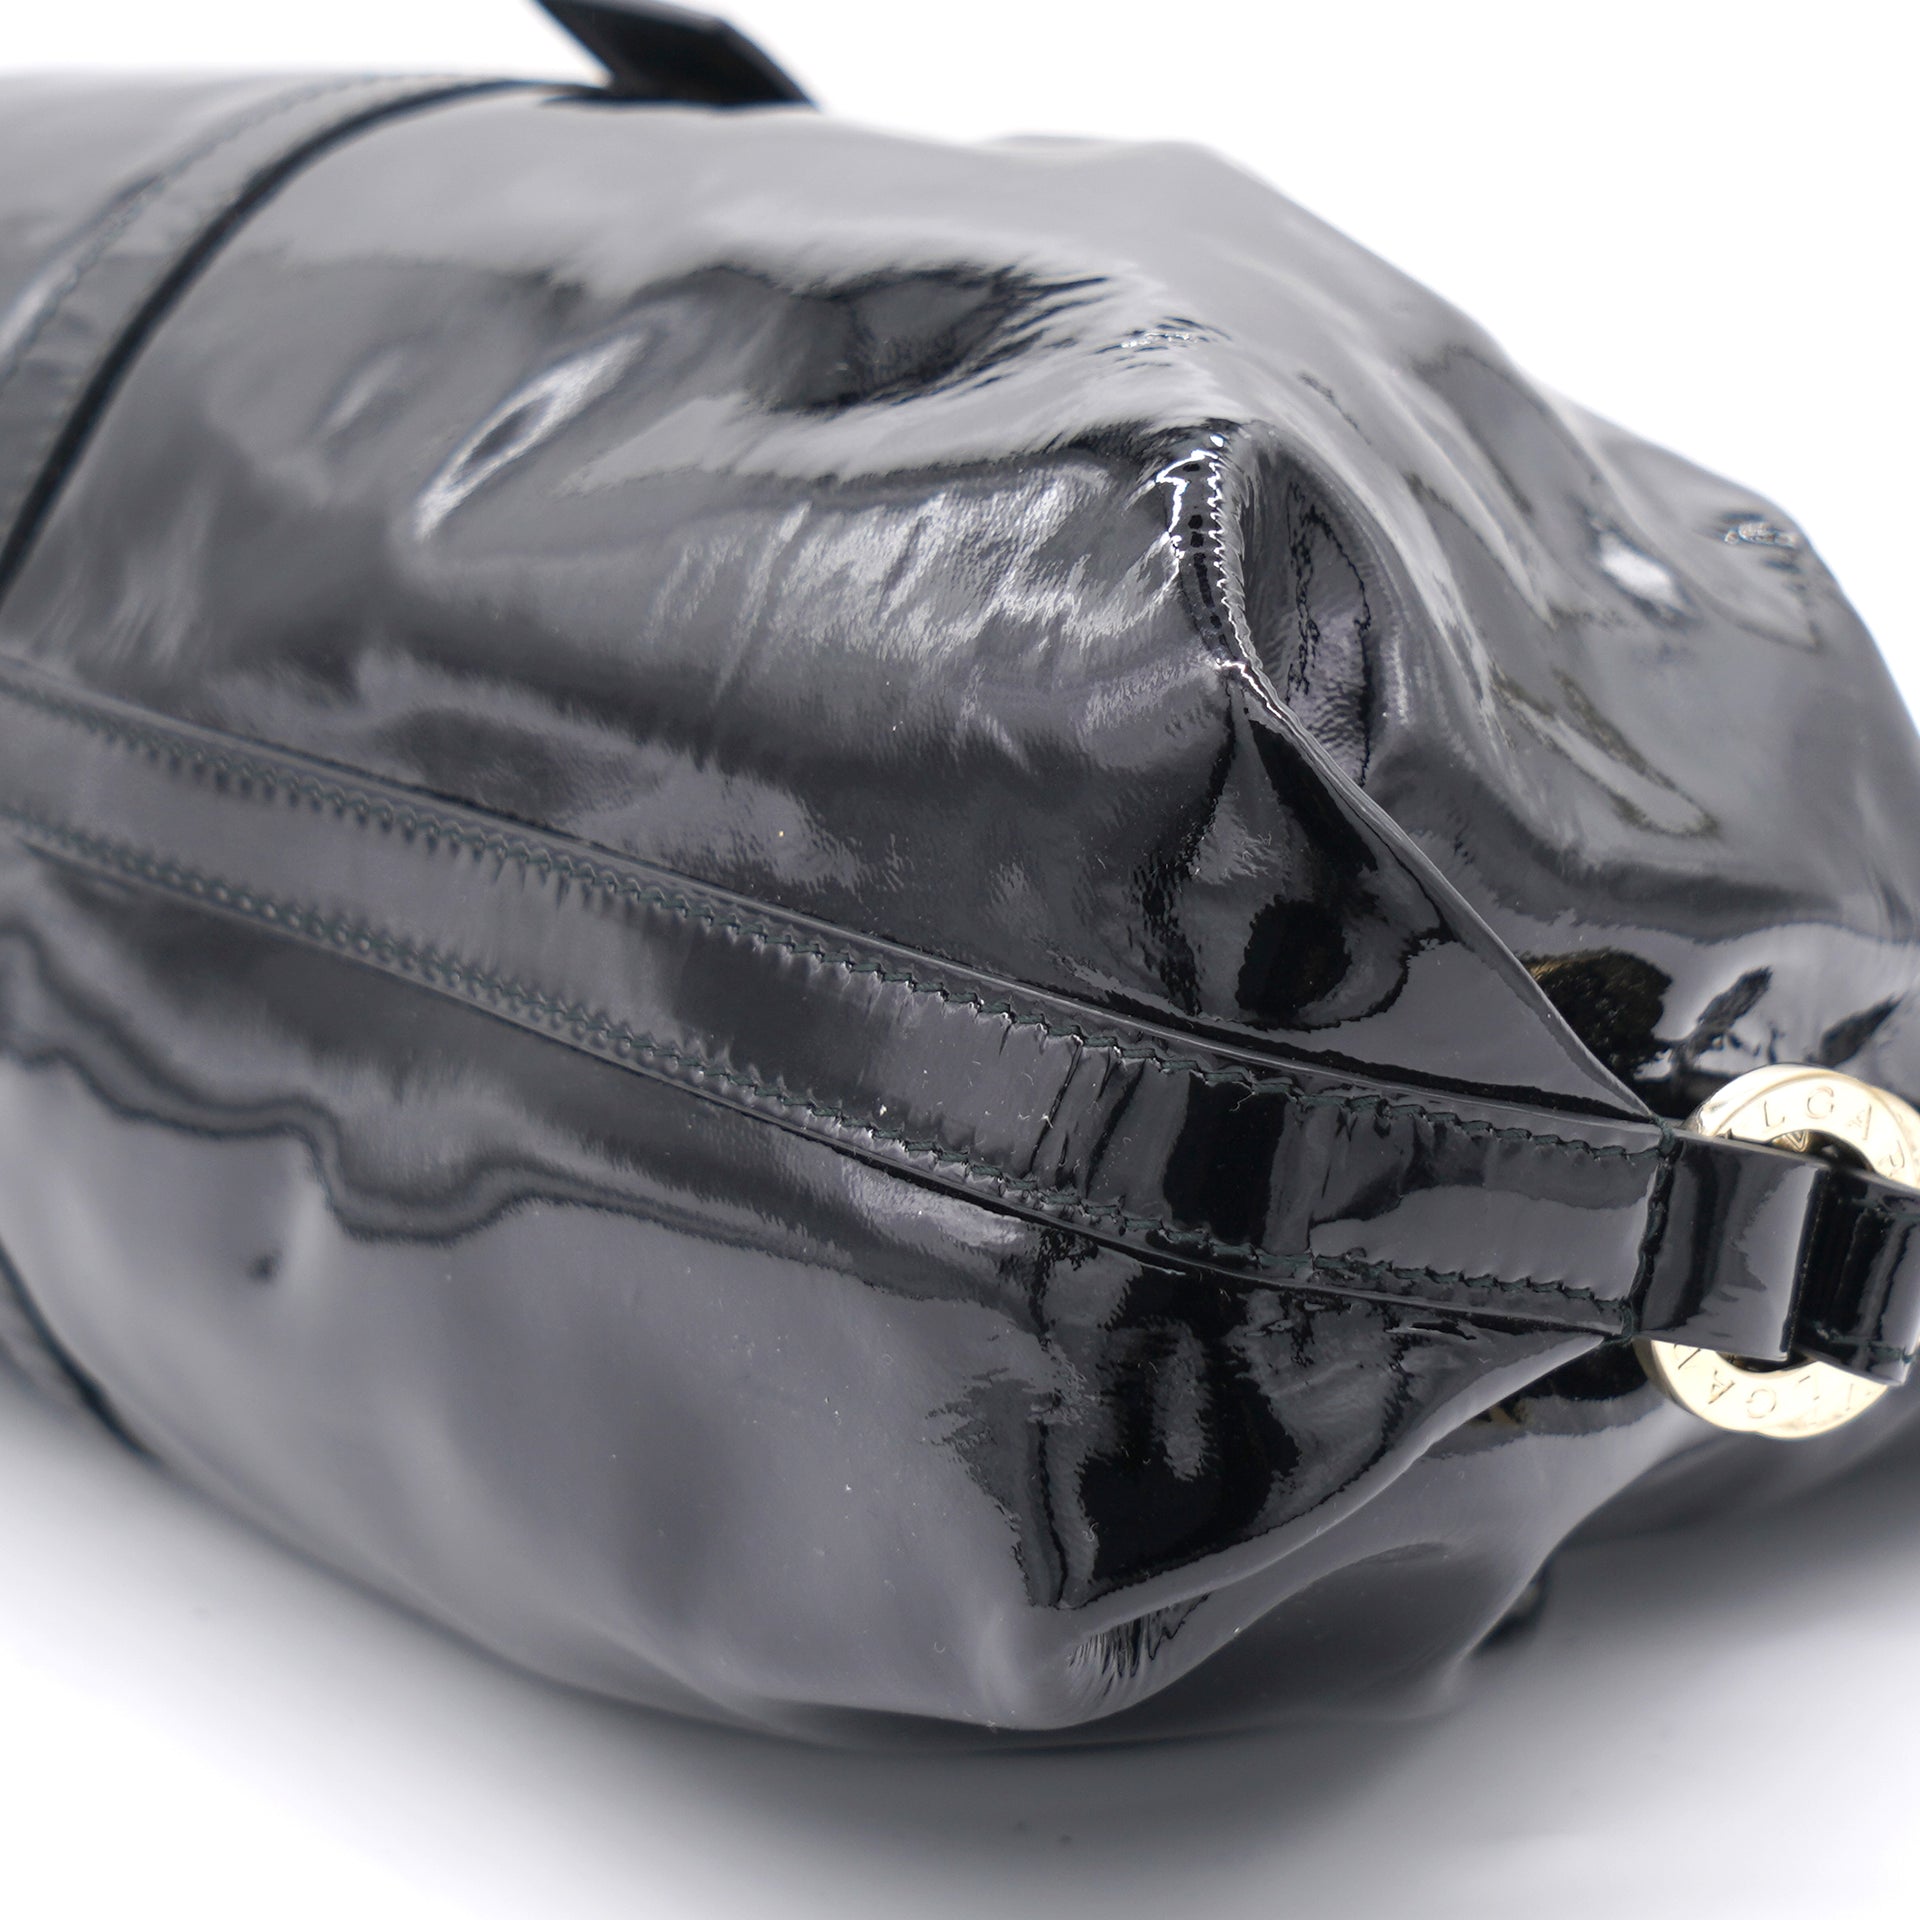 Patent Leather Black Double Ring Shoulder Bag